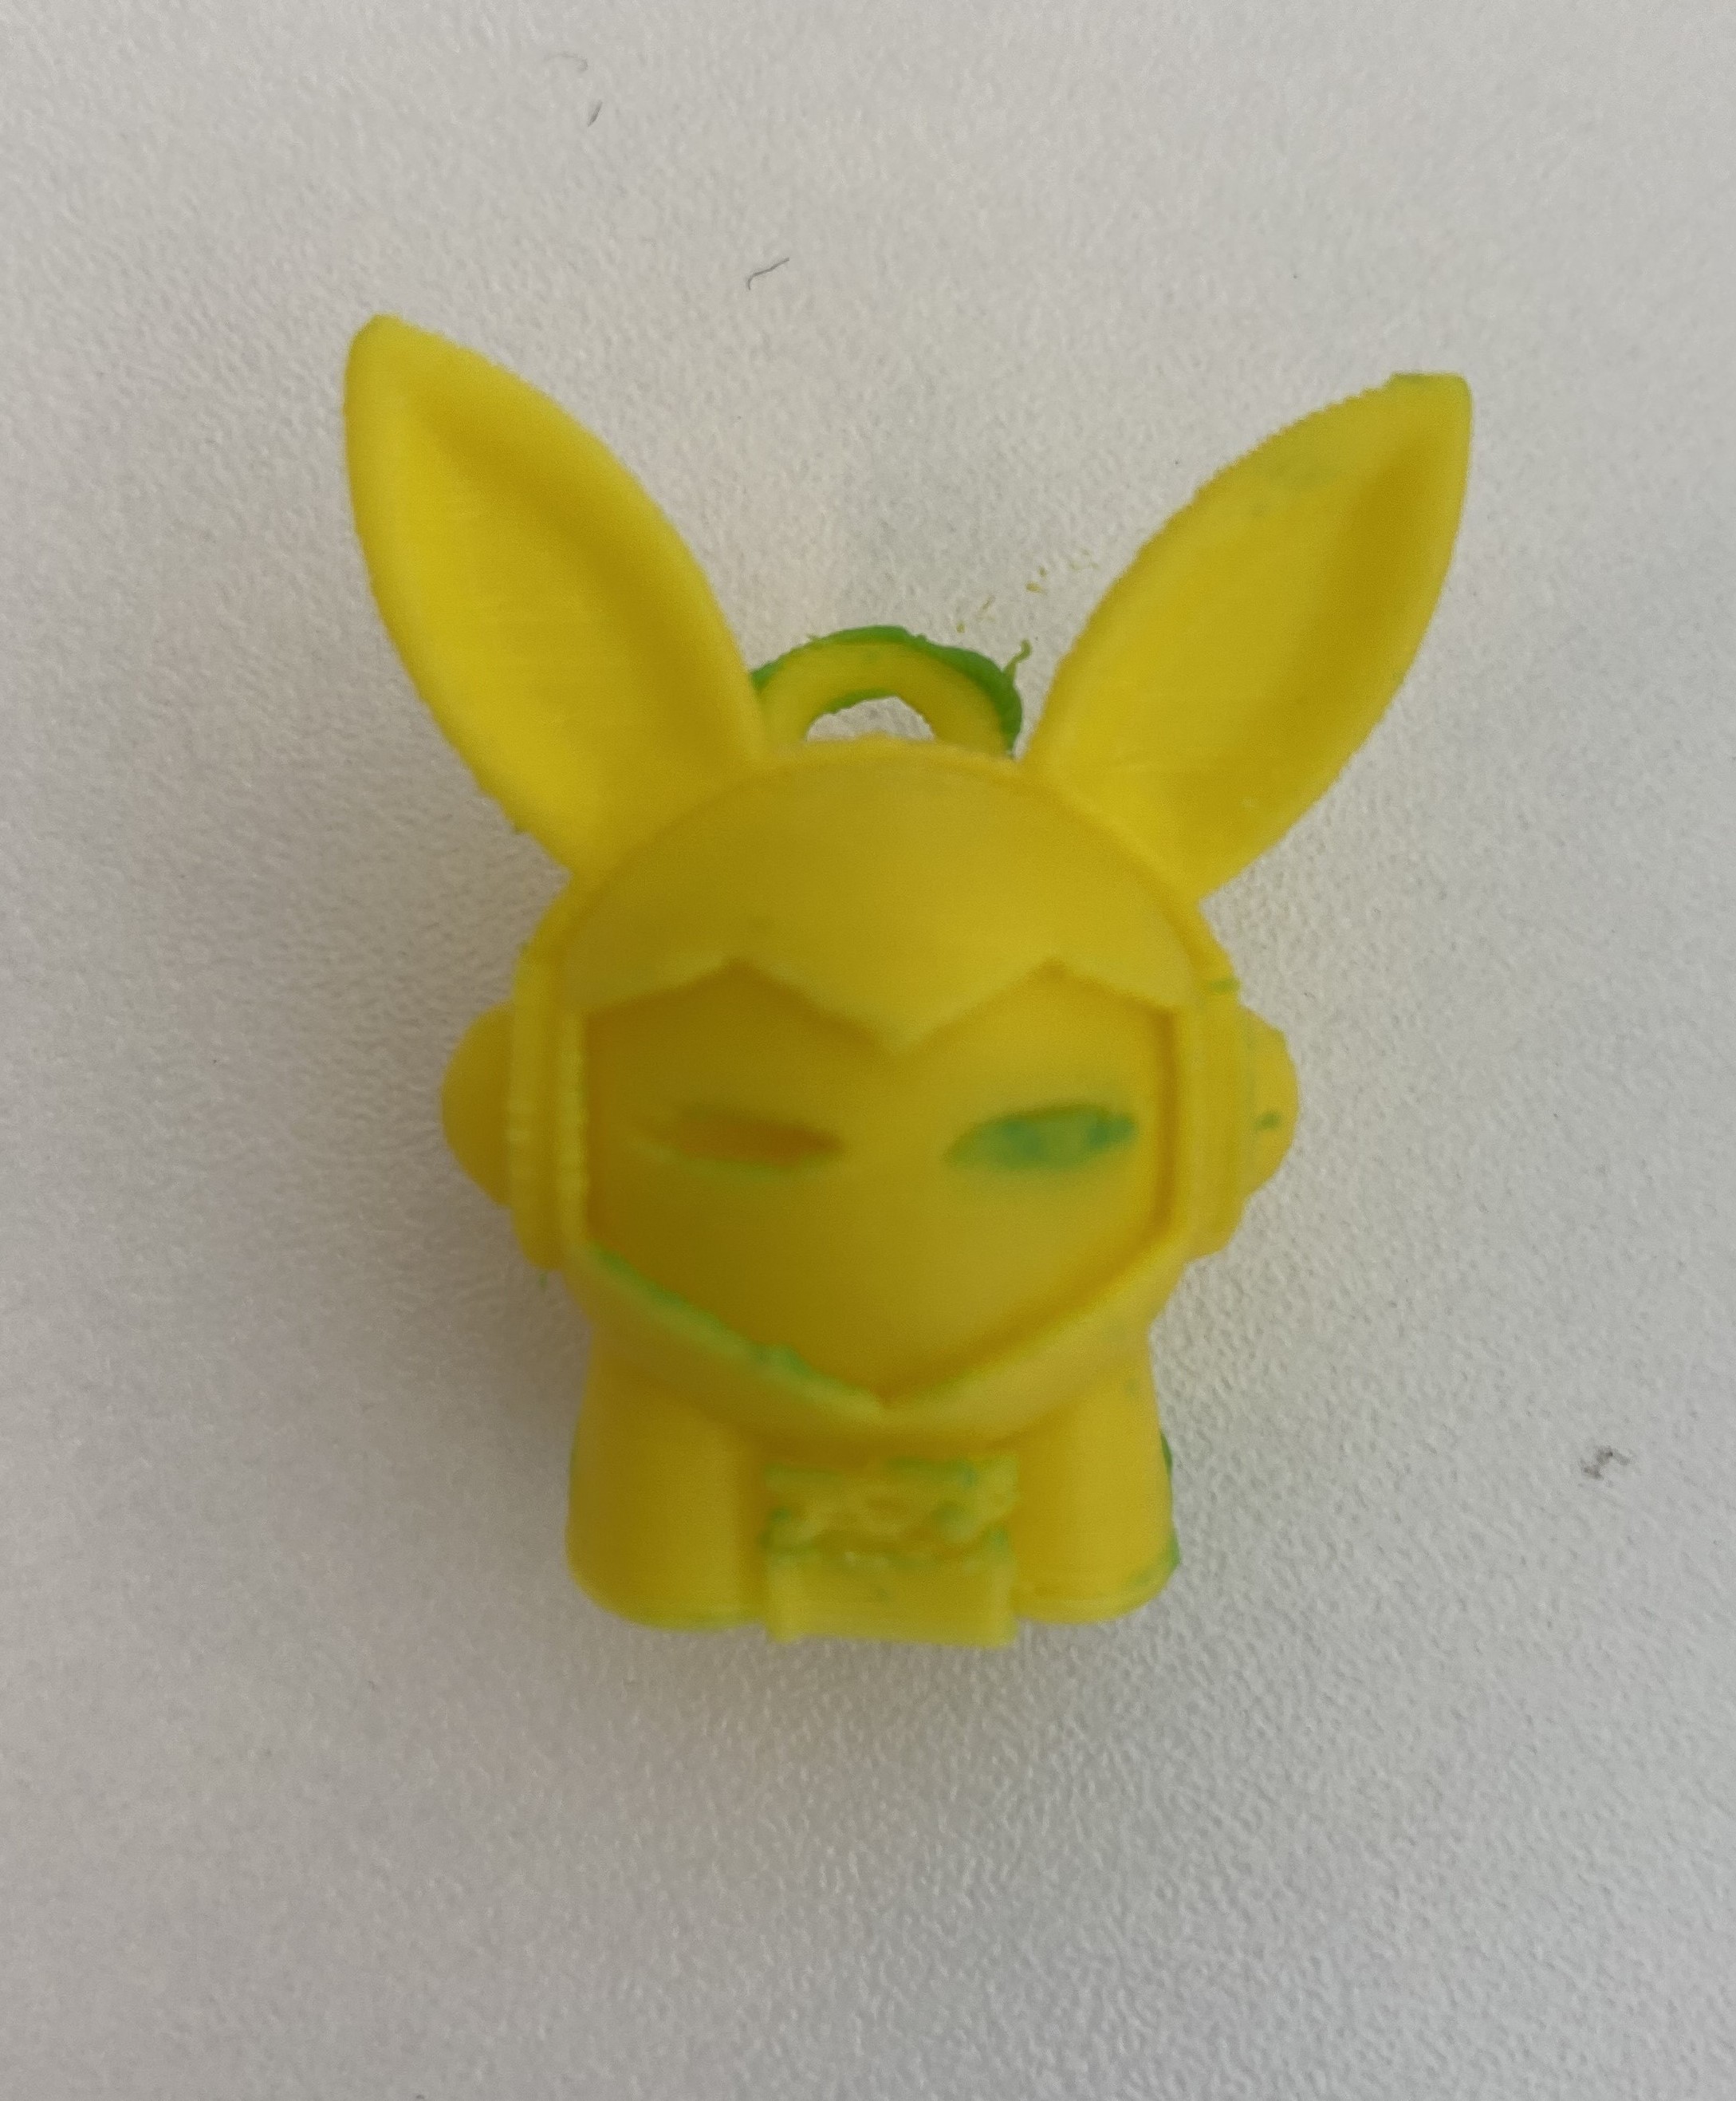 3d printed yellow rabbit toy